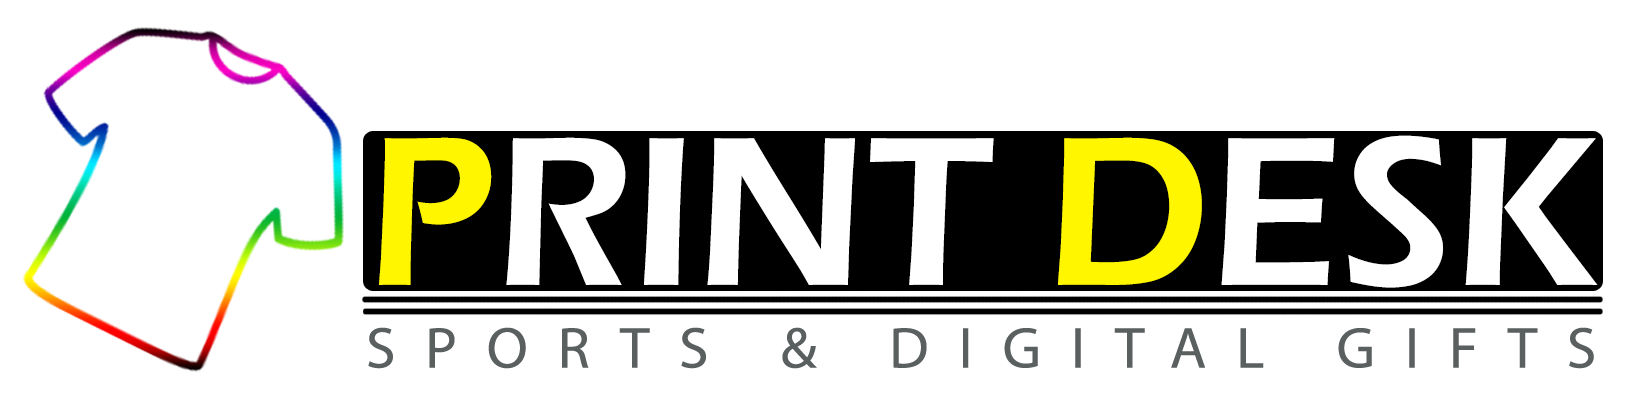 printdesk logo